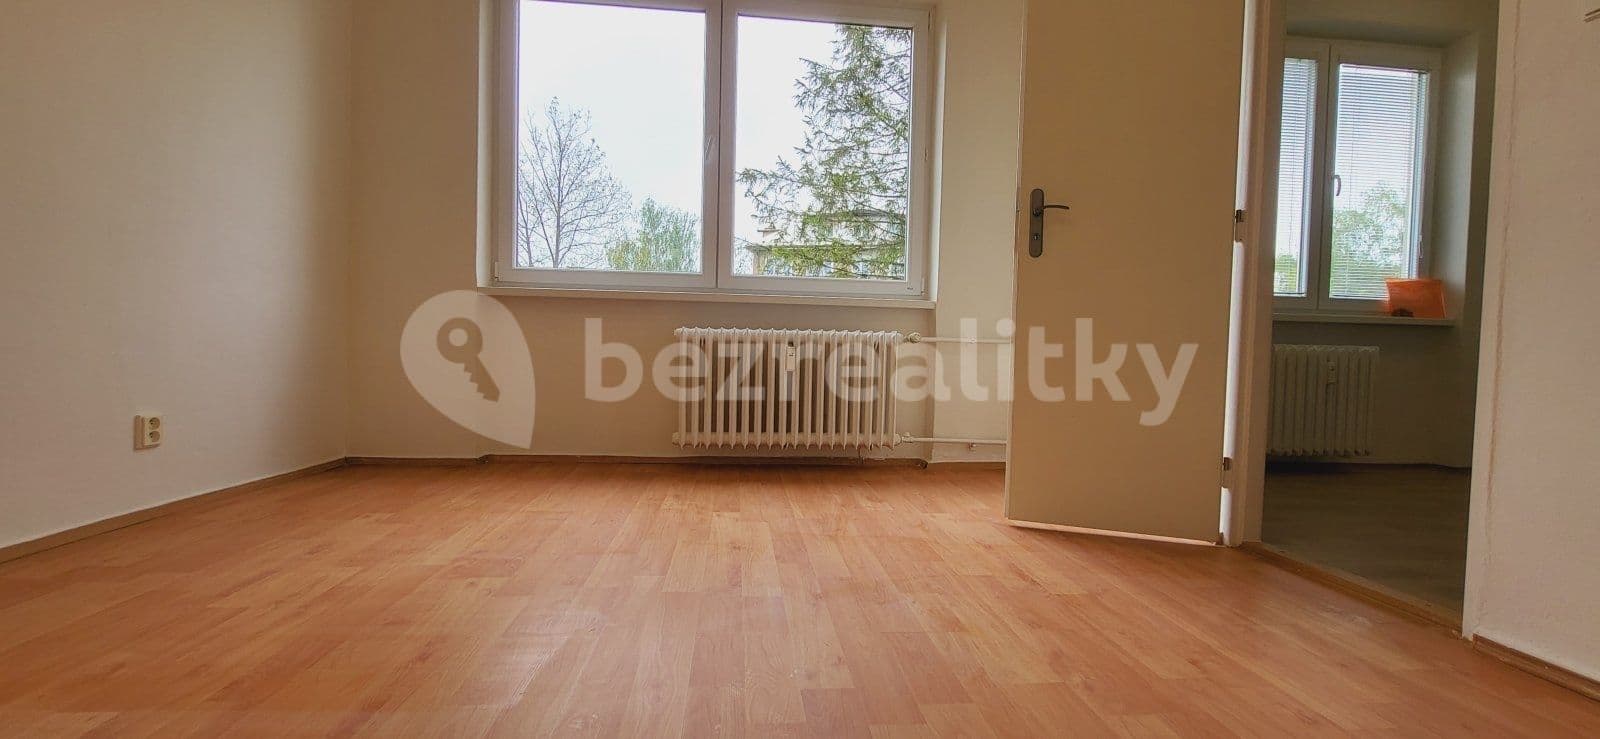 Prenájom bytu 2-izbový 50 m², Beskydská, Havířov, Moravskoslezský kraj